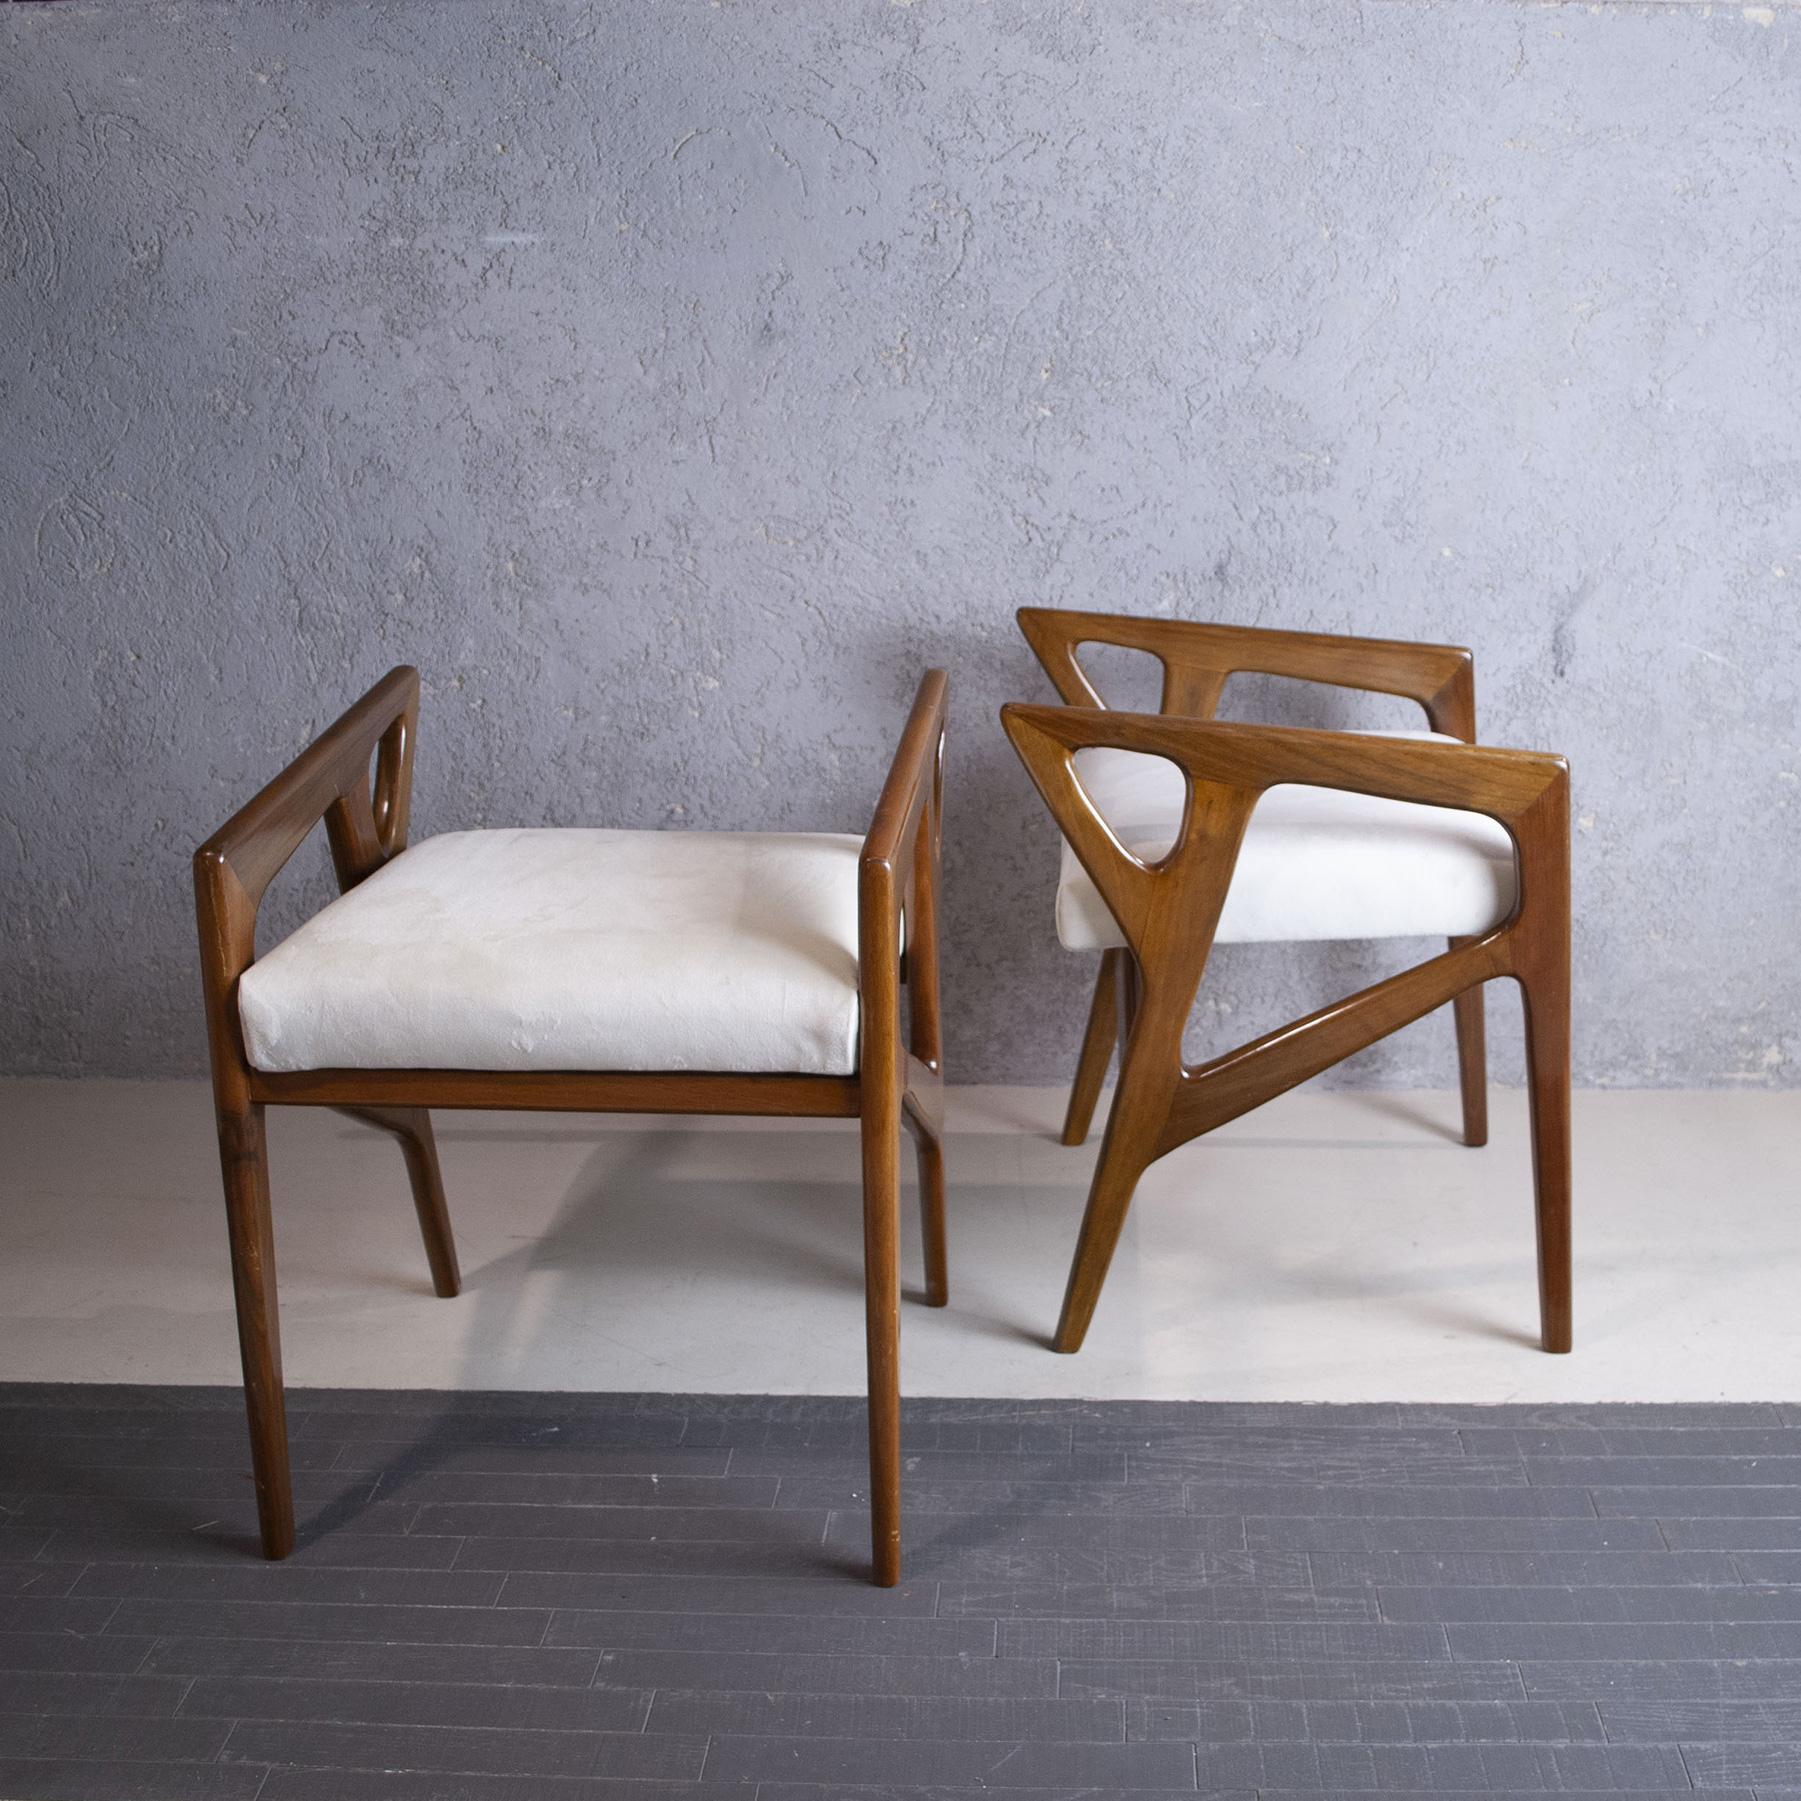 Fabric Gio Ponti italian midcentury pair of wooden stools 1950s for Cassina